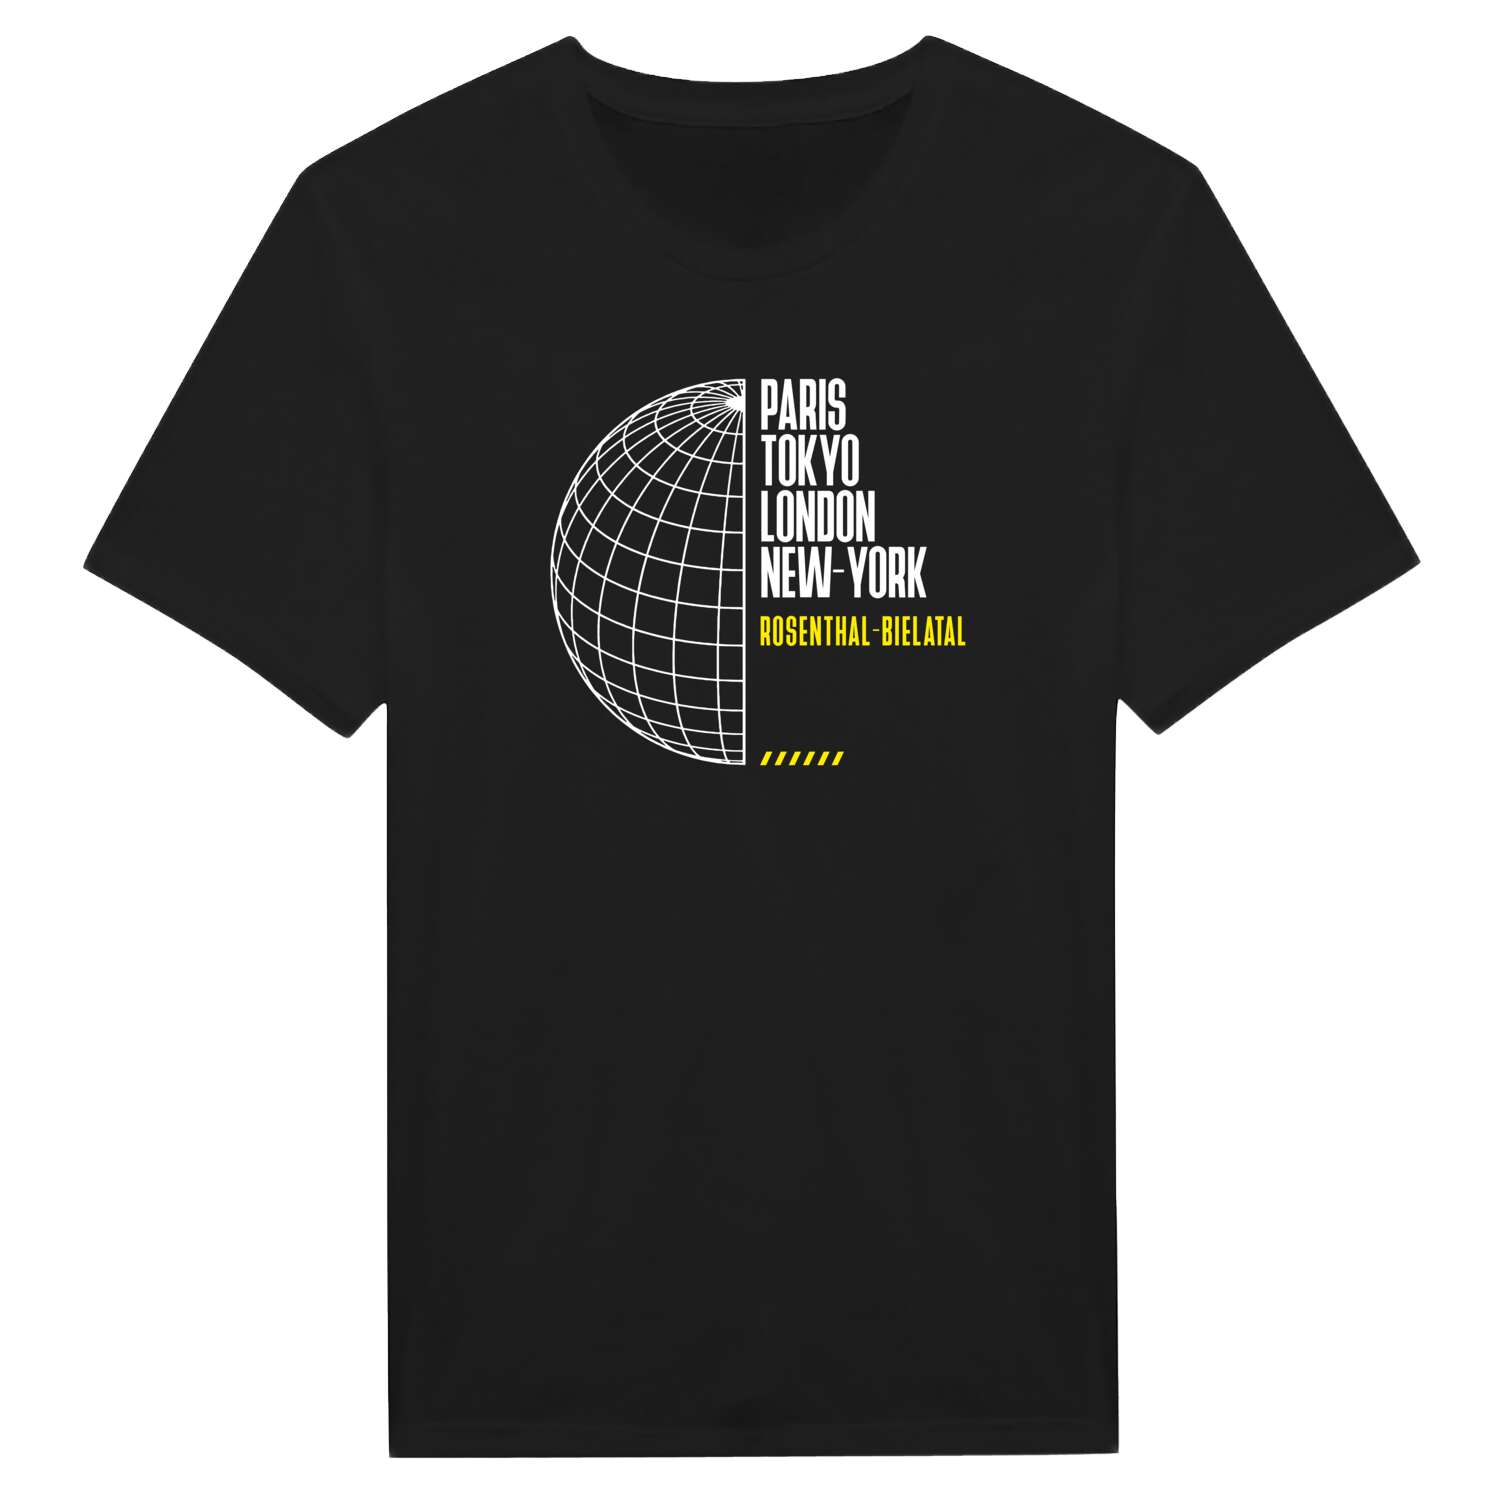 Rosenthal-Bielatal T-Shirt »Paris Tokyo London«